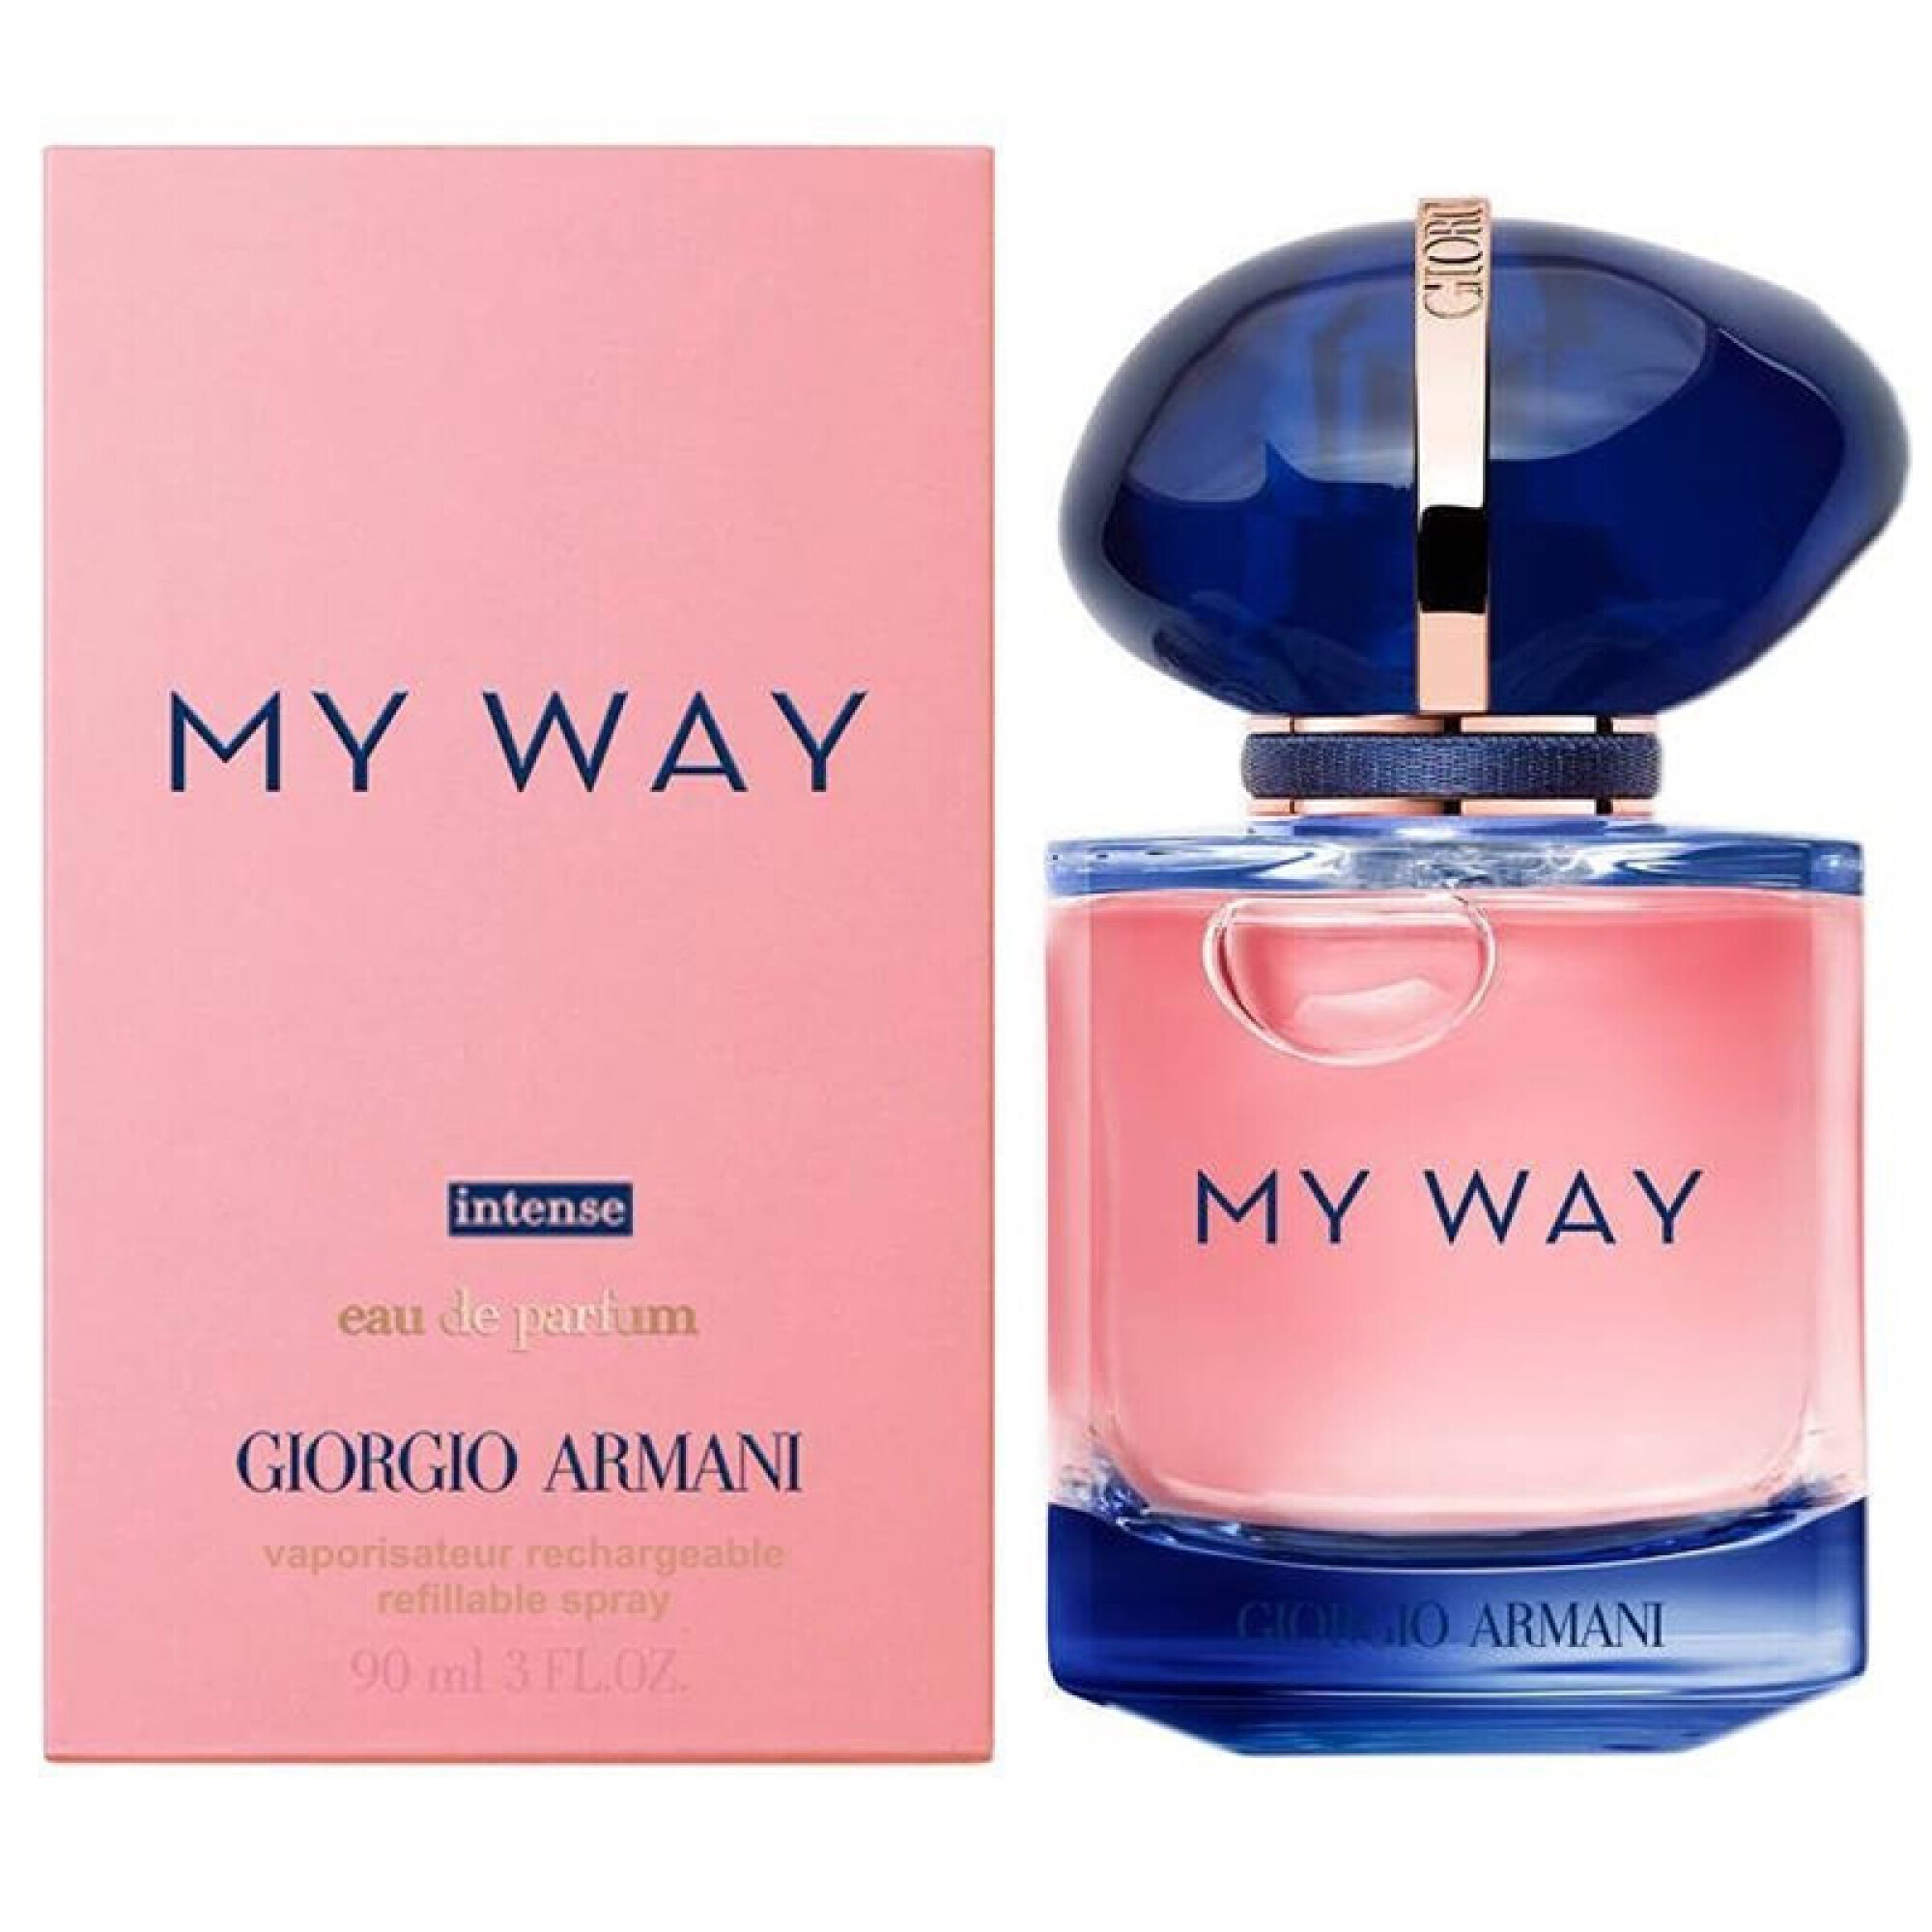 My Way Intense eau de parfum Giorgio Armani - 90 ml — Farmacia Don